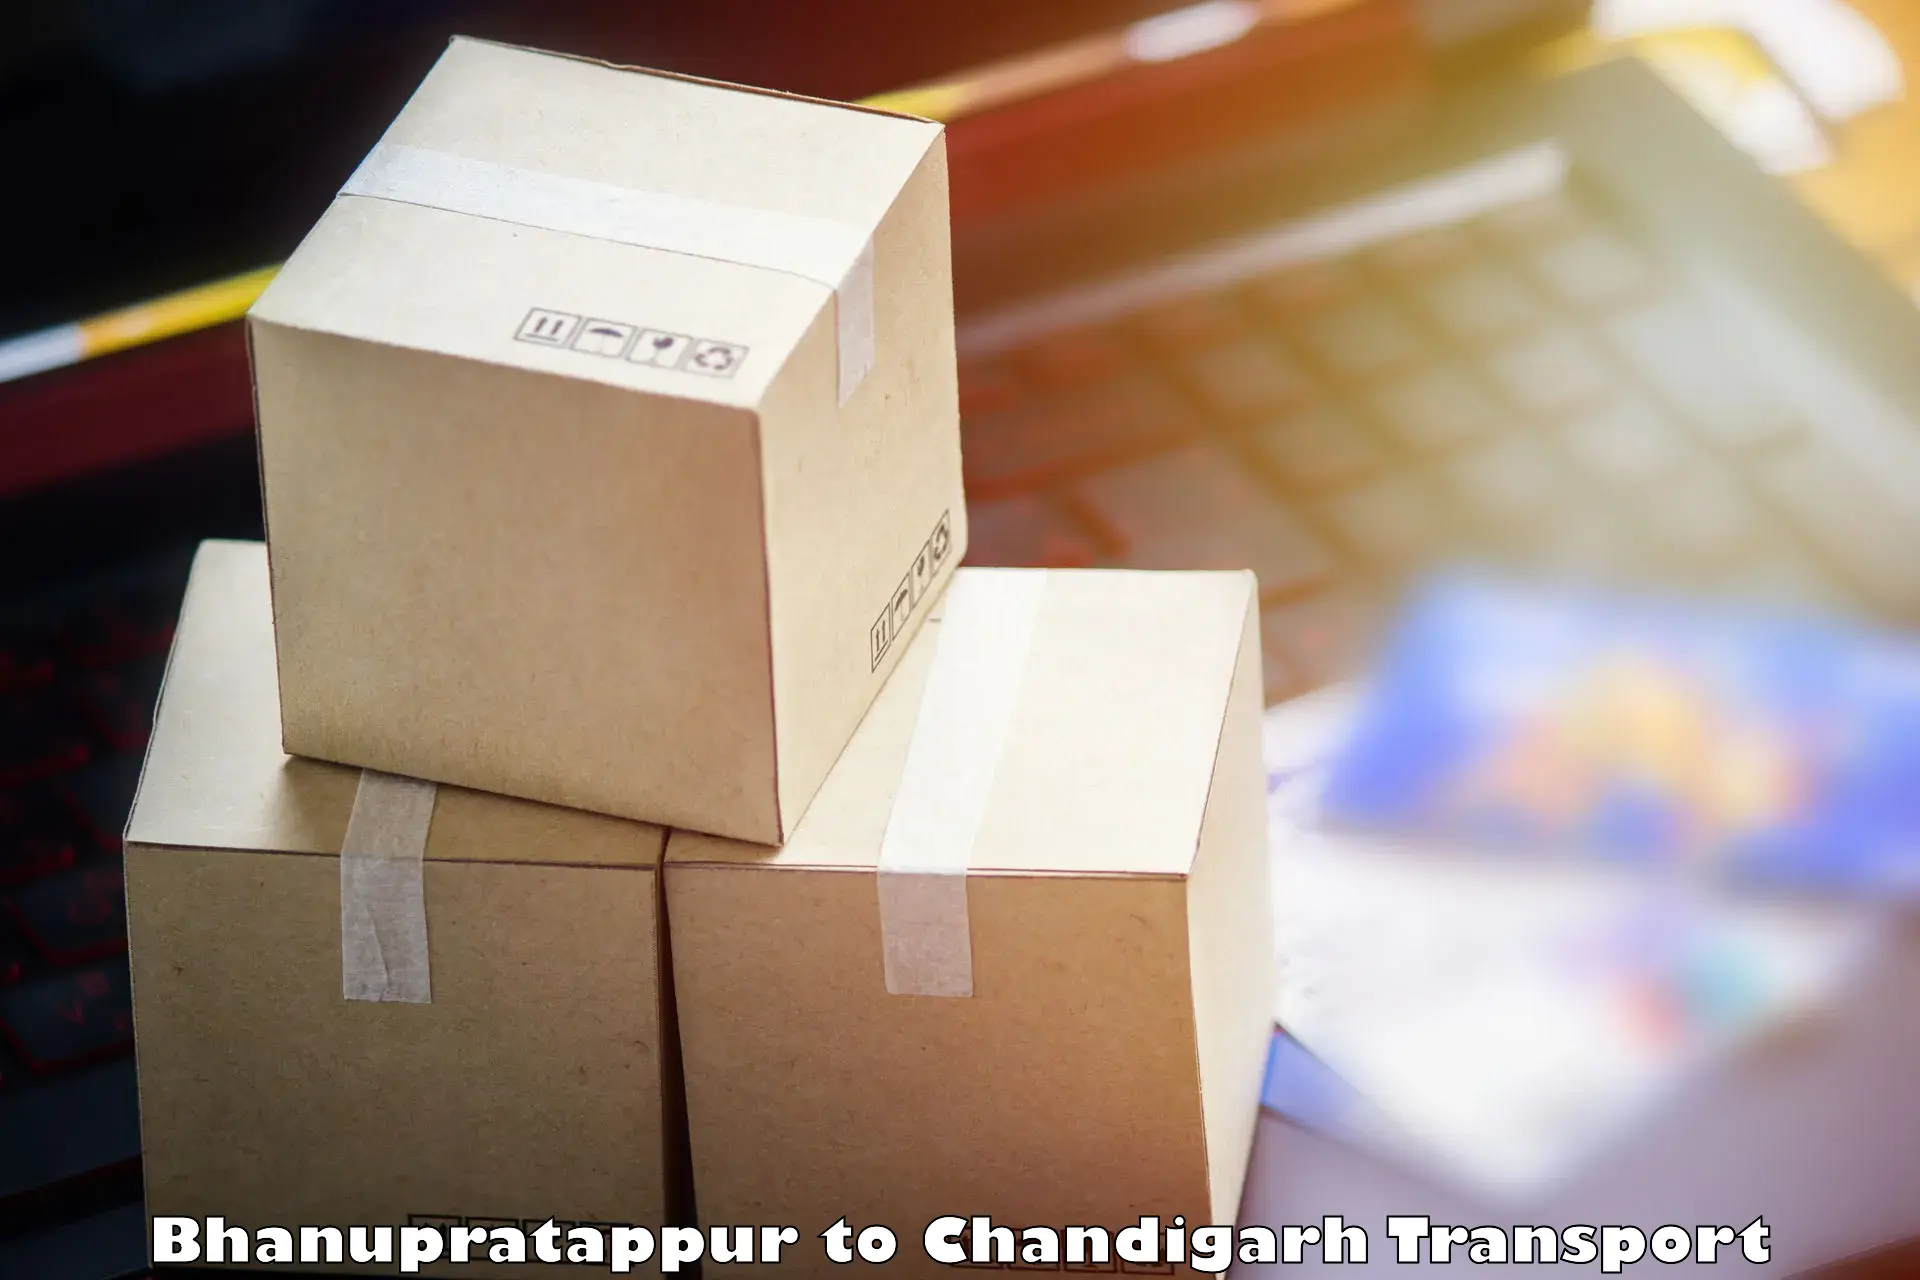 Shipping partner Bhanupratappur to Chandigarh